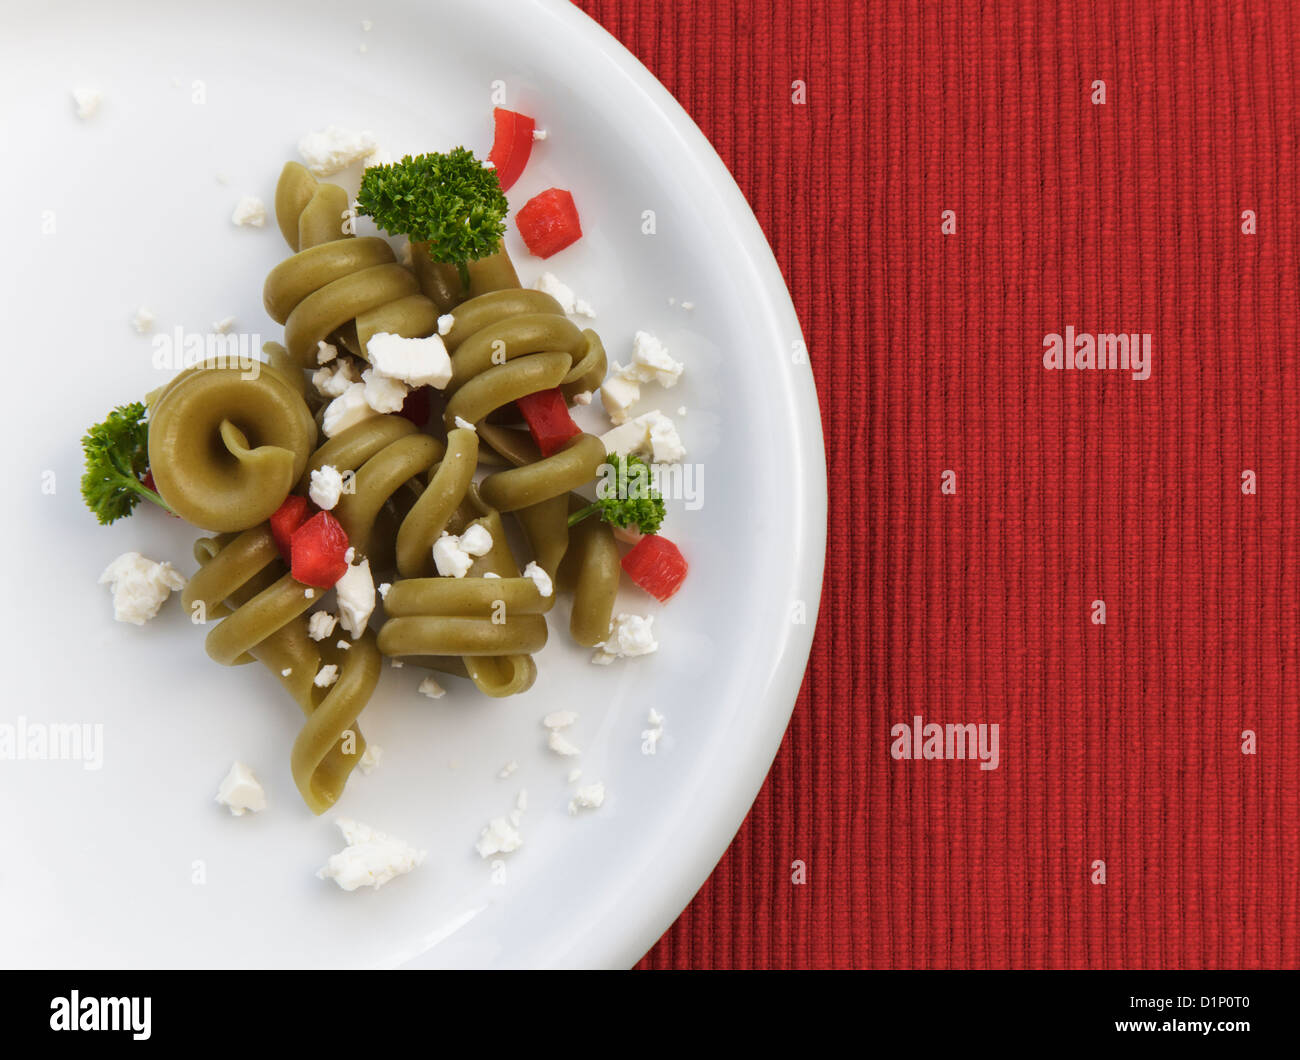 Pasta salad on white plate Stock Photo